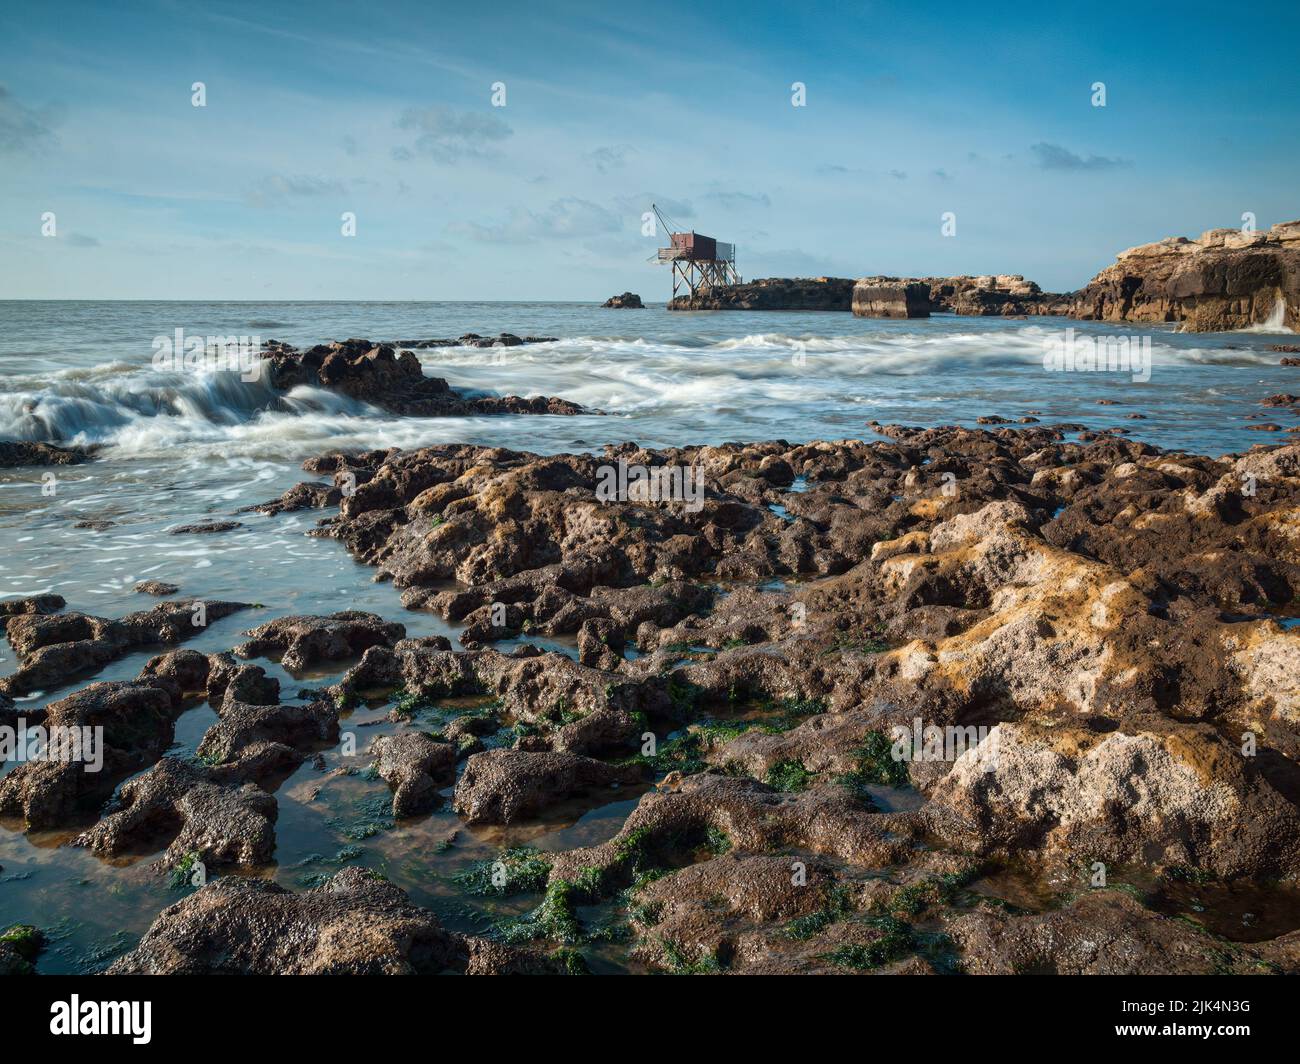 Coastal scene of Atlantic ocean waves and rocky shore at Saint Palais-sur-mer, Charente-Maritime, France Stock Photo